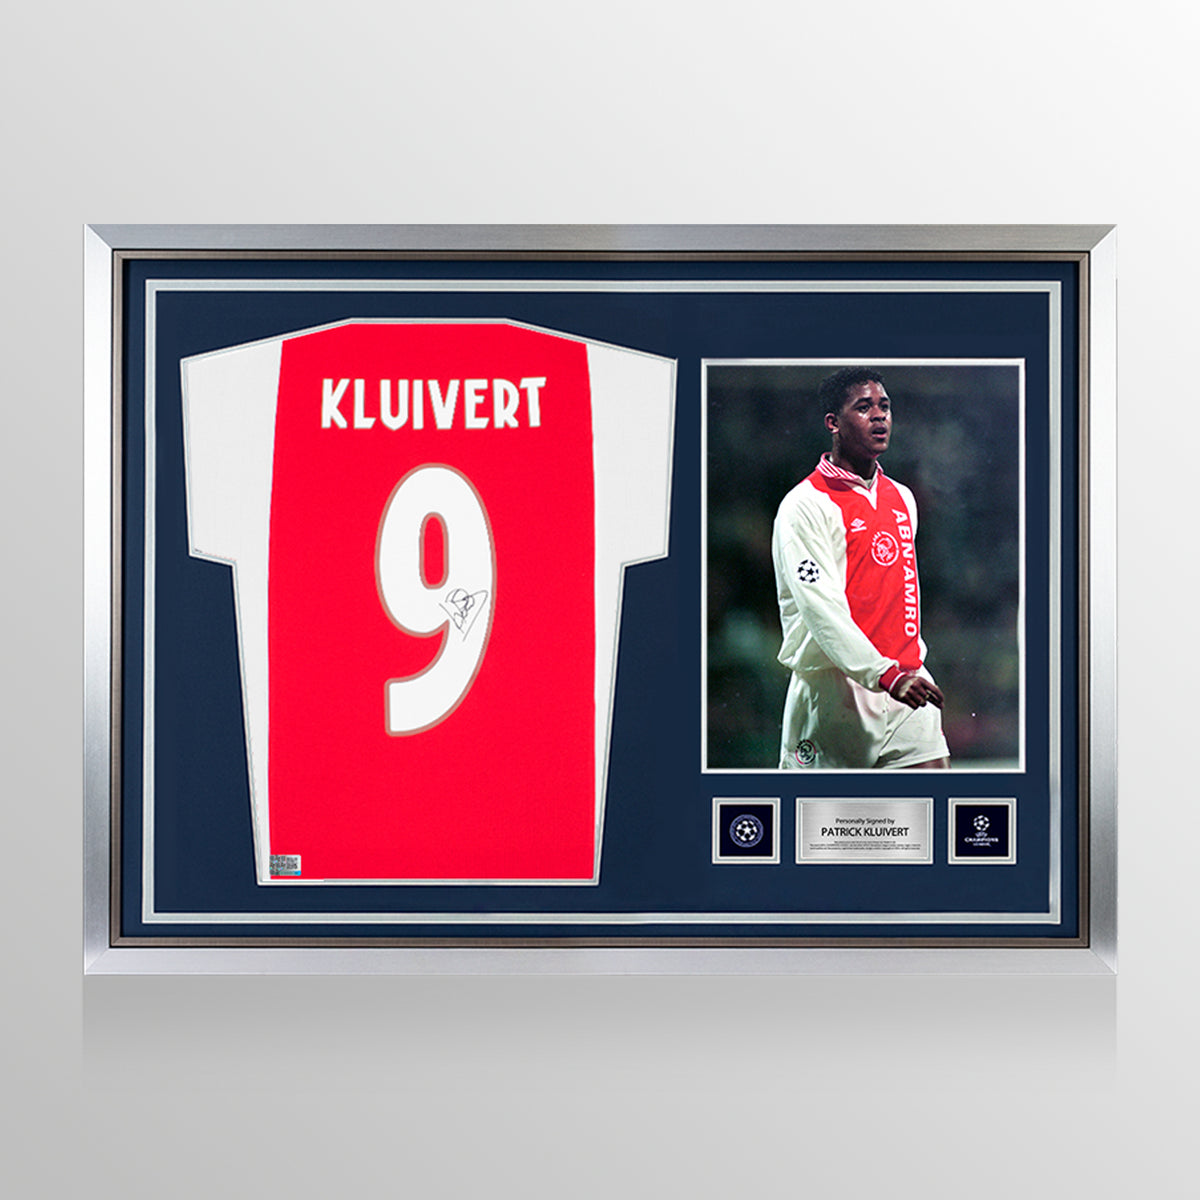 Patrick Kluivert, offizieller UEFA-Champions-League-Rücken, signiertes und gerahmtes modernes Ajax-Heimtrikot